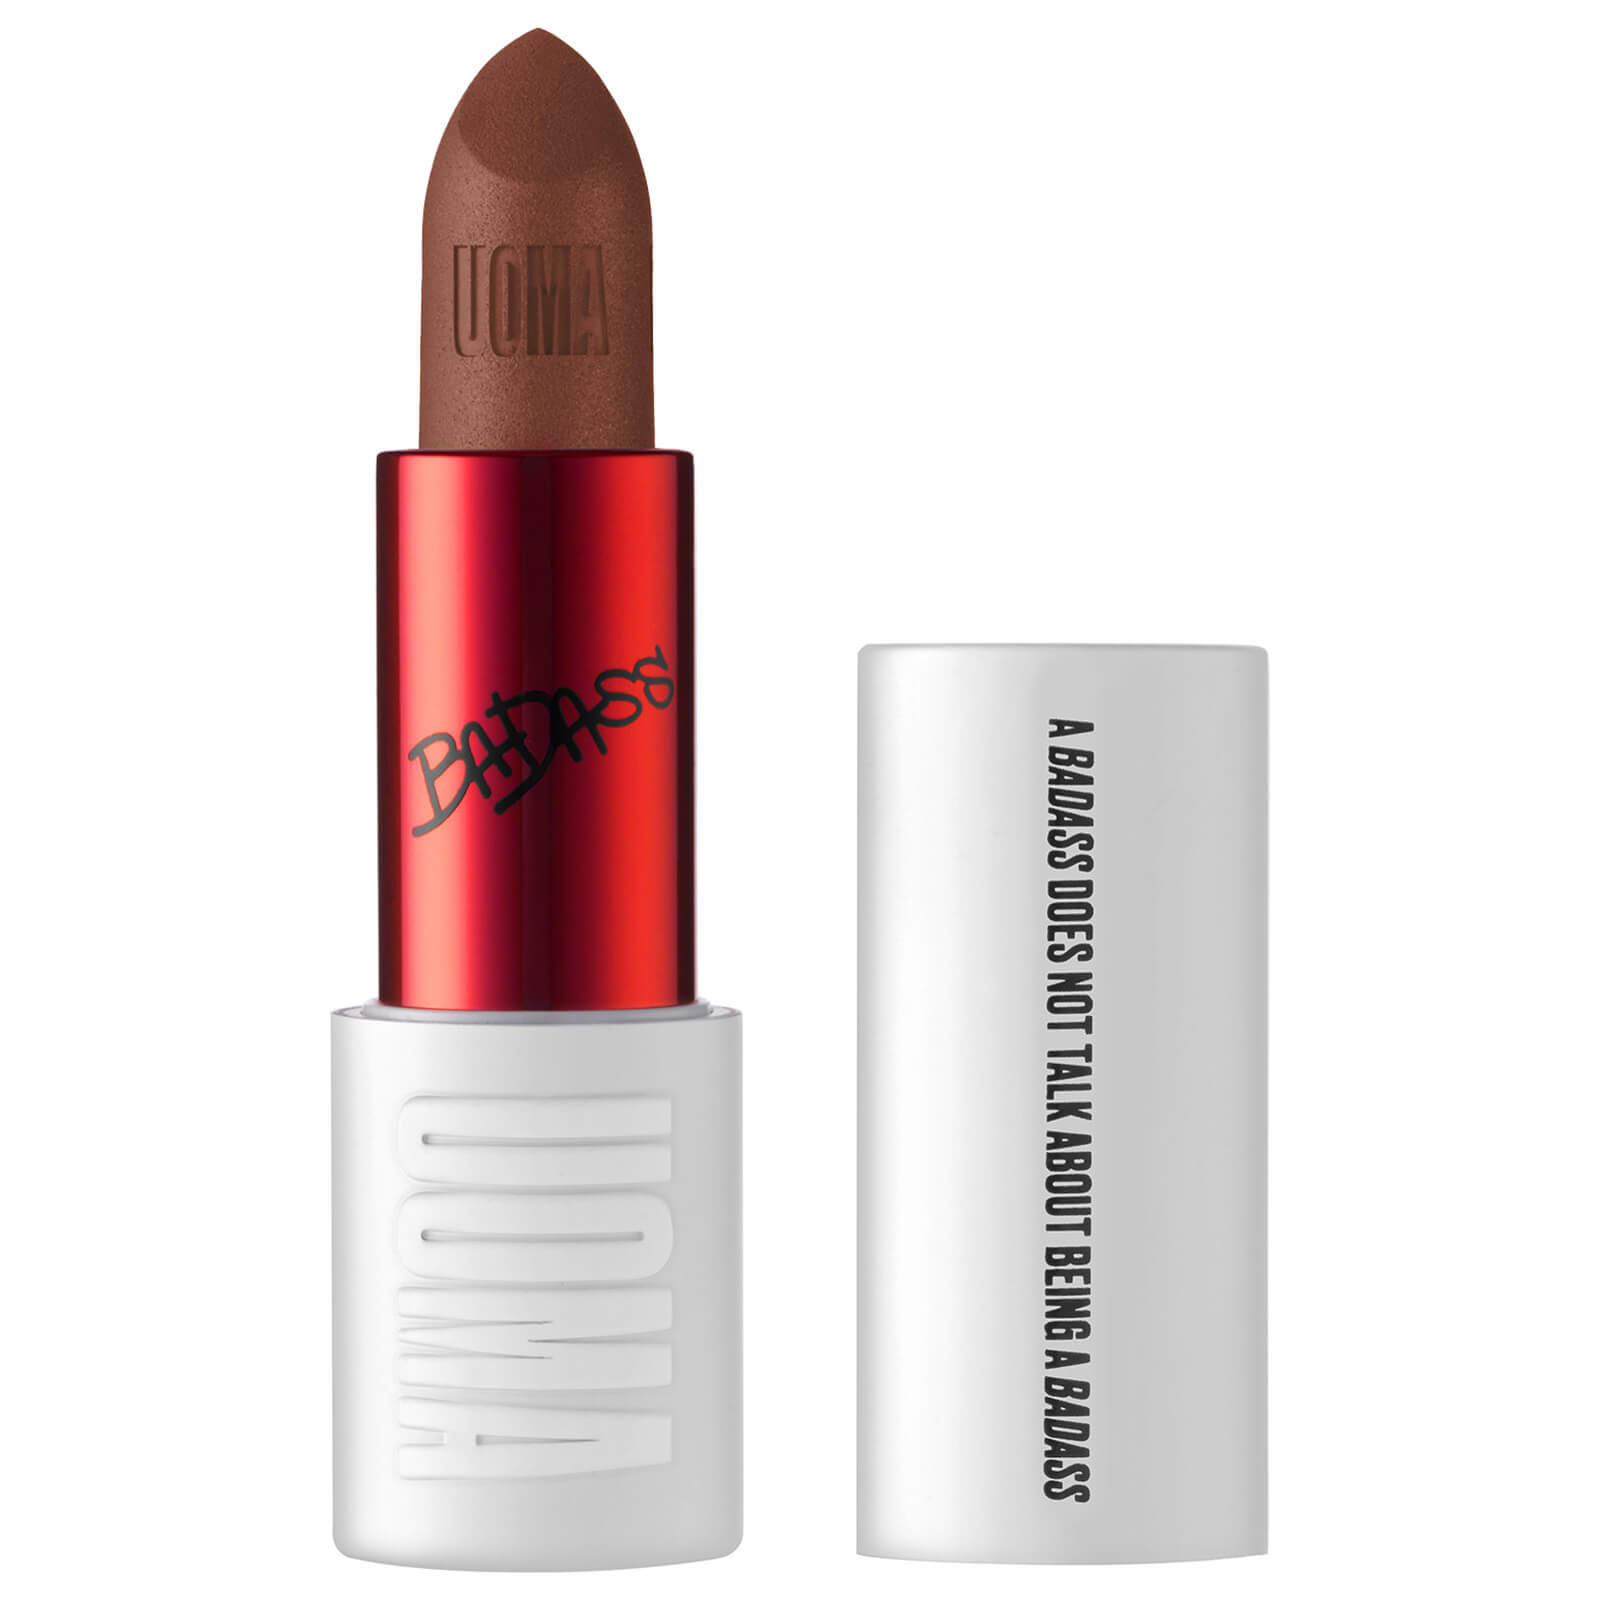 uoma beauty badass icon concentrated matte lipstick 3.5ml (verschiedene farbtÃ¶ne) - tracy